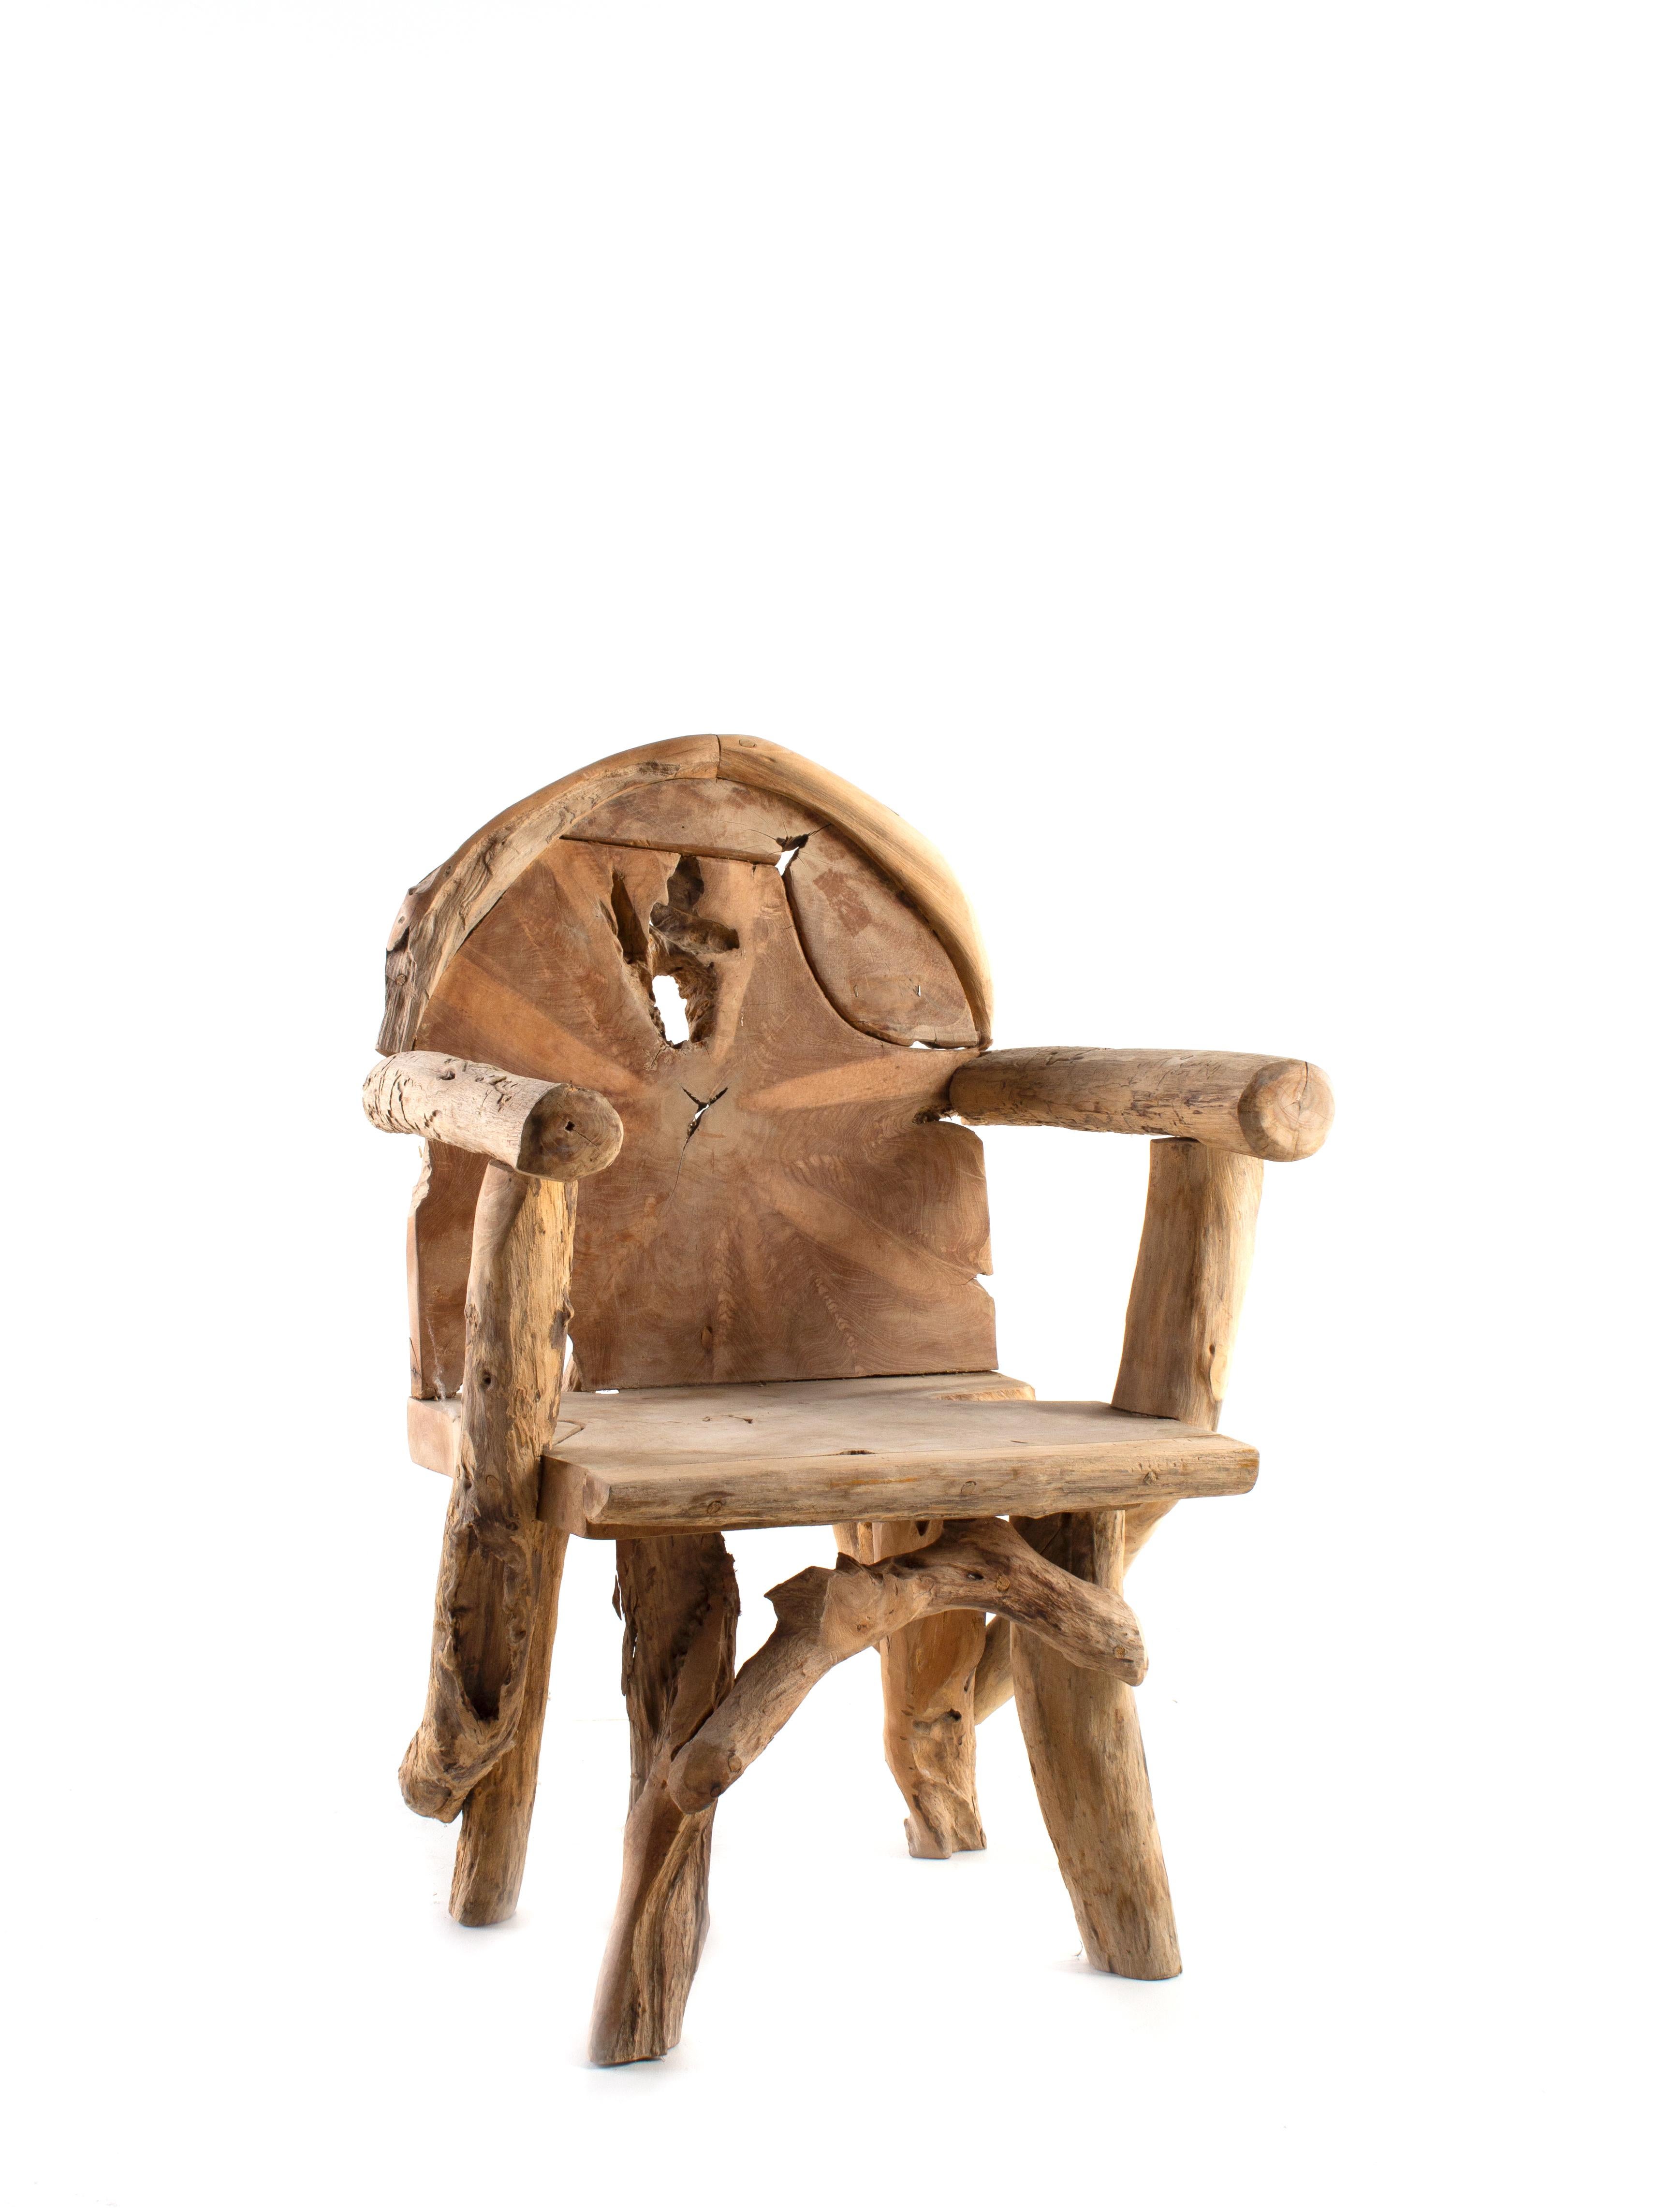 Teak Folk Art dining chair.